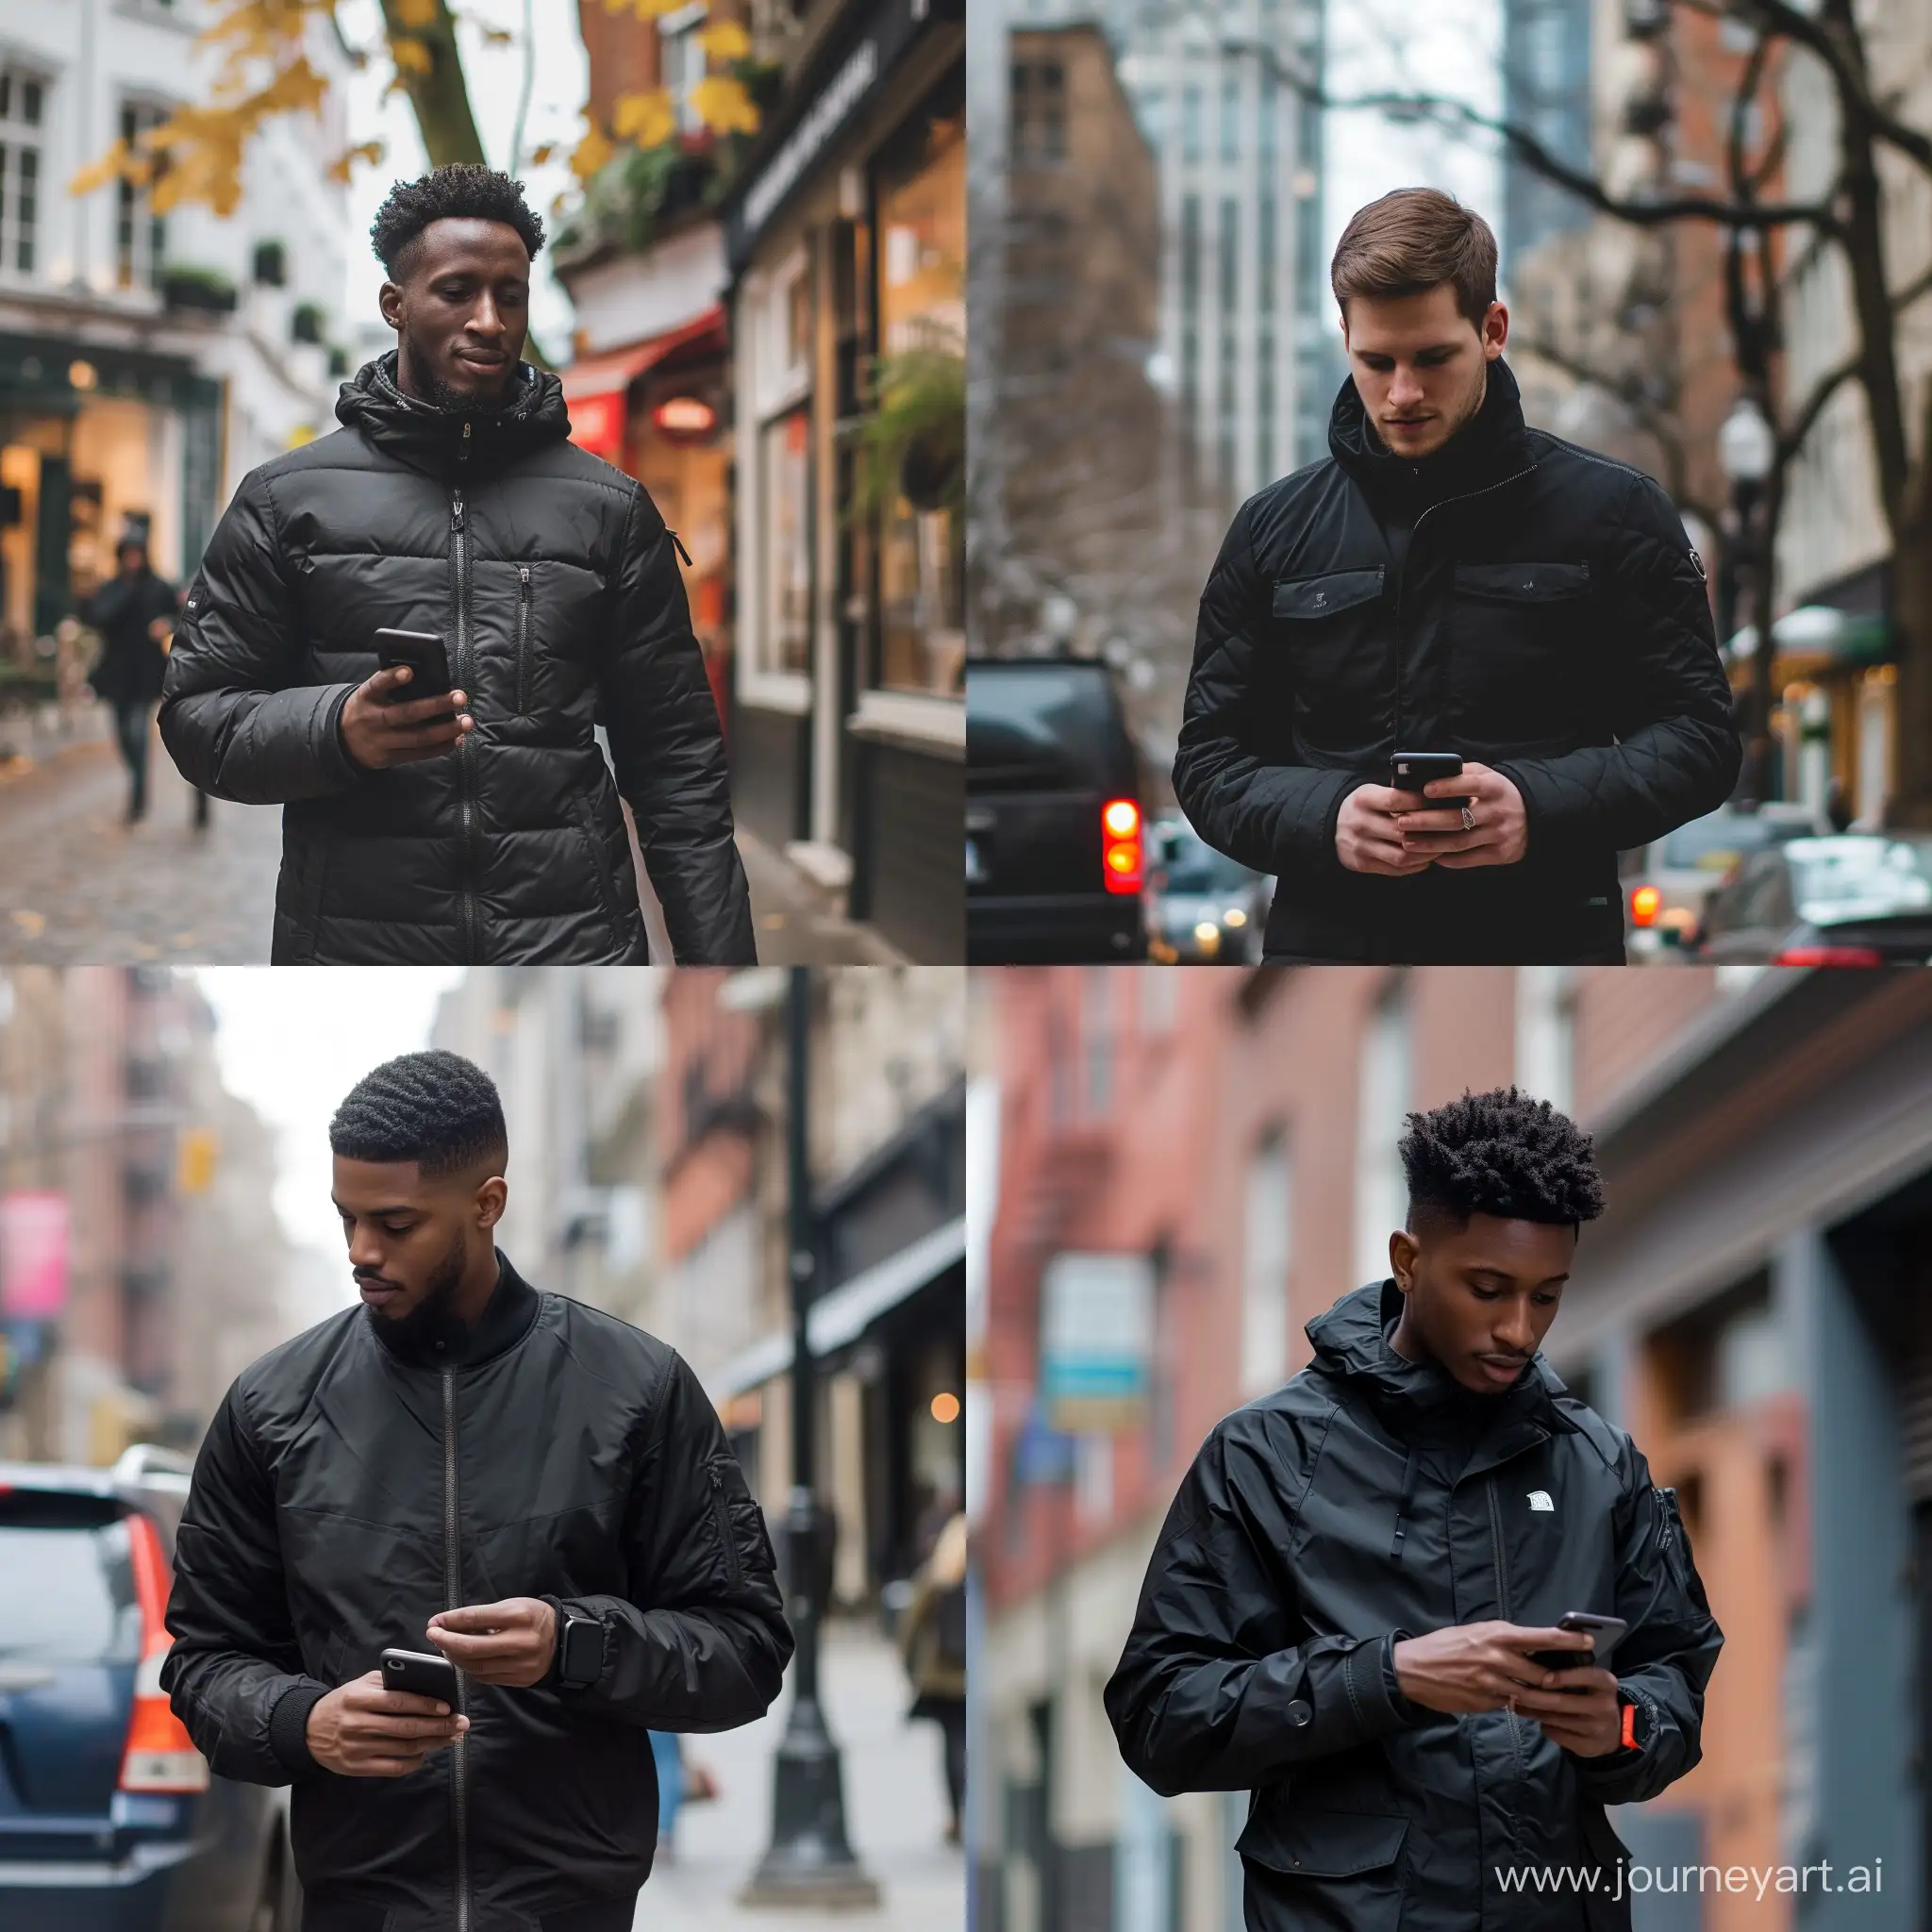 Stylish-Man-in-Black-Jacket-Walking-and-Checking-Phone-in-Urban-Setting